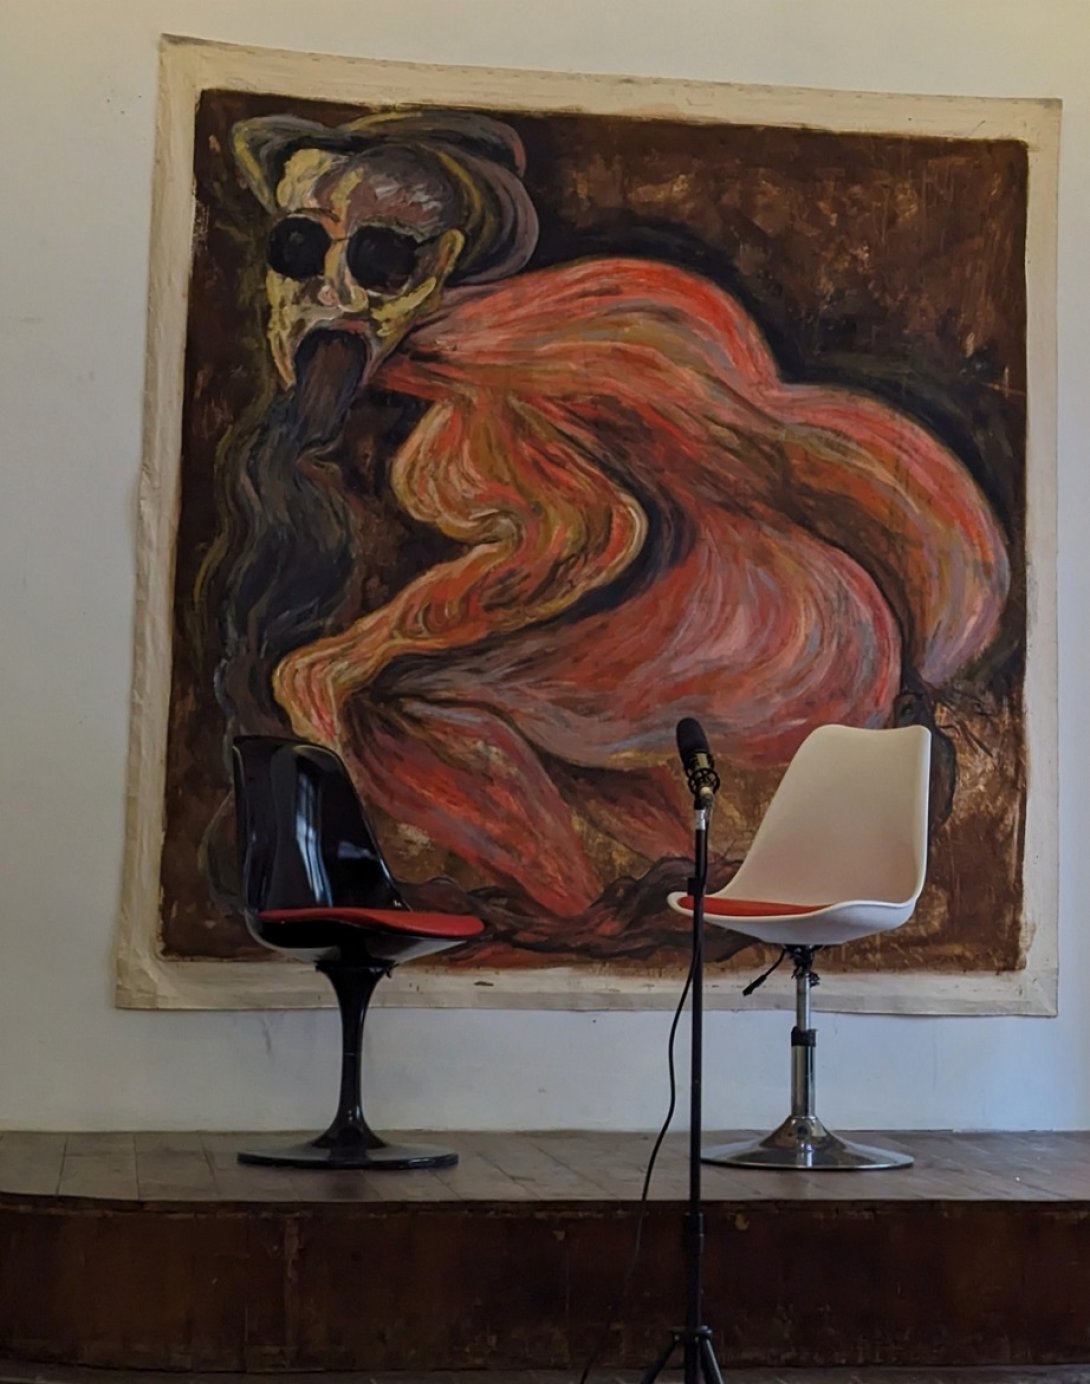 Obra de arte, óleo de Sandra Ceballos: "La cena del parlante arrepentido". Óleo sobre tela, 213 x 217 cm.